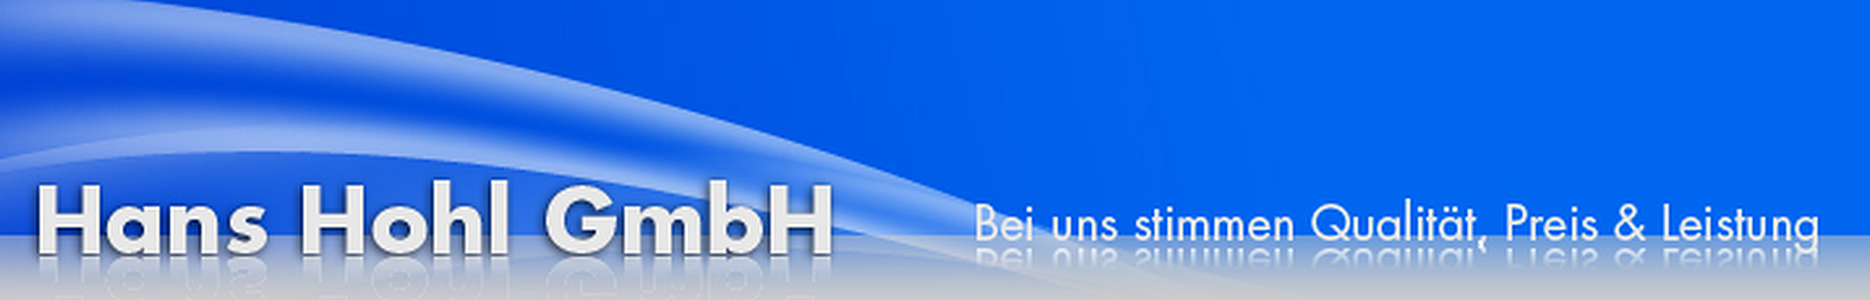 Hohl GmbH Logo